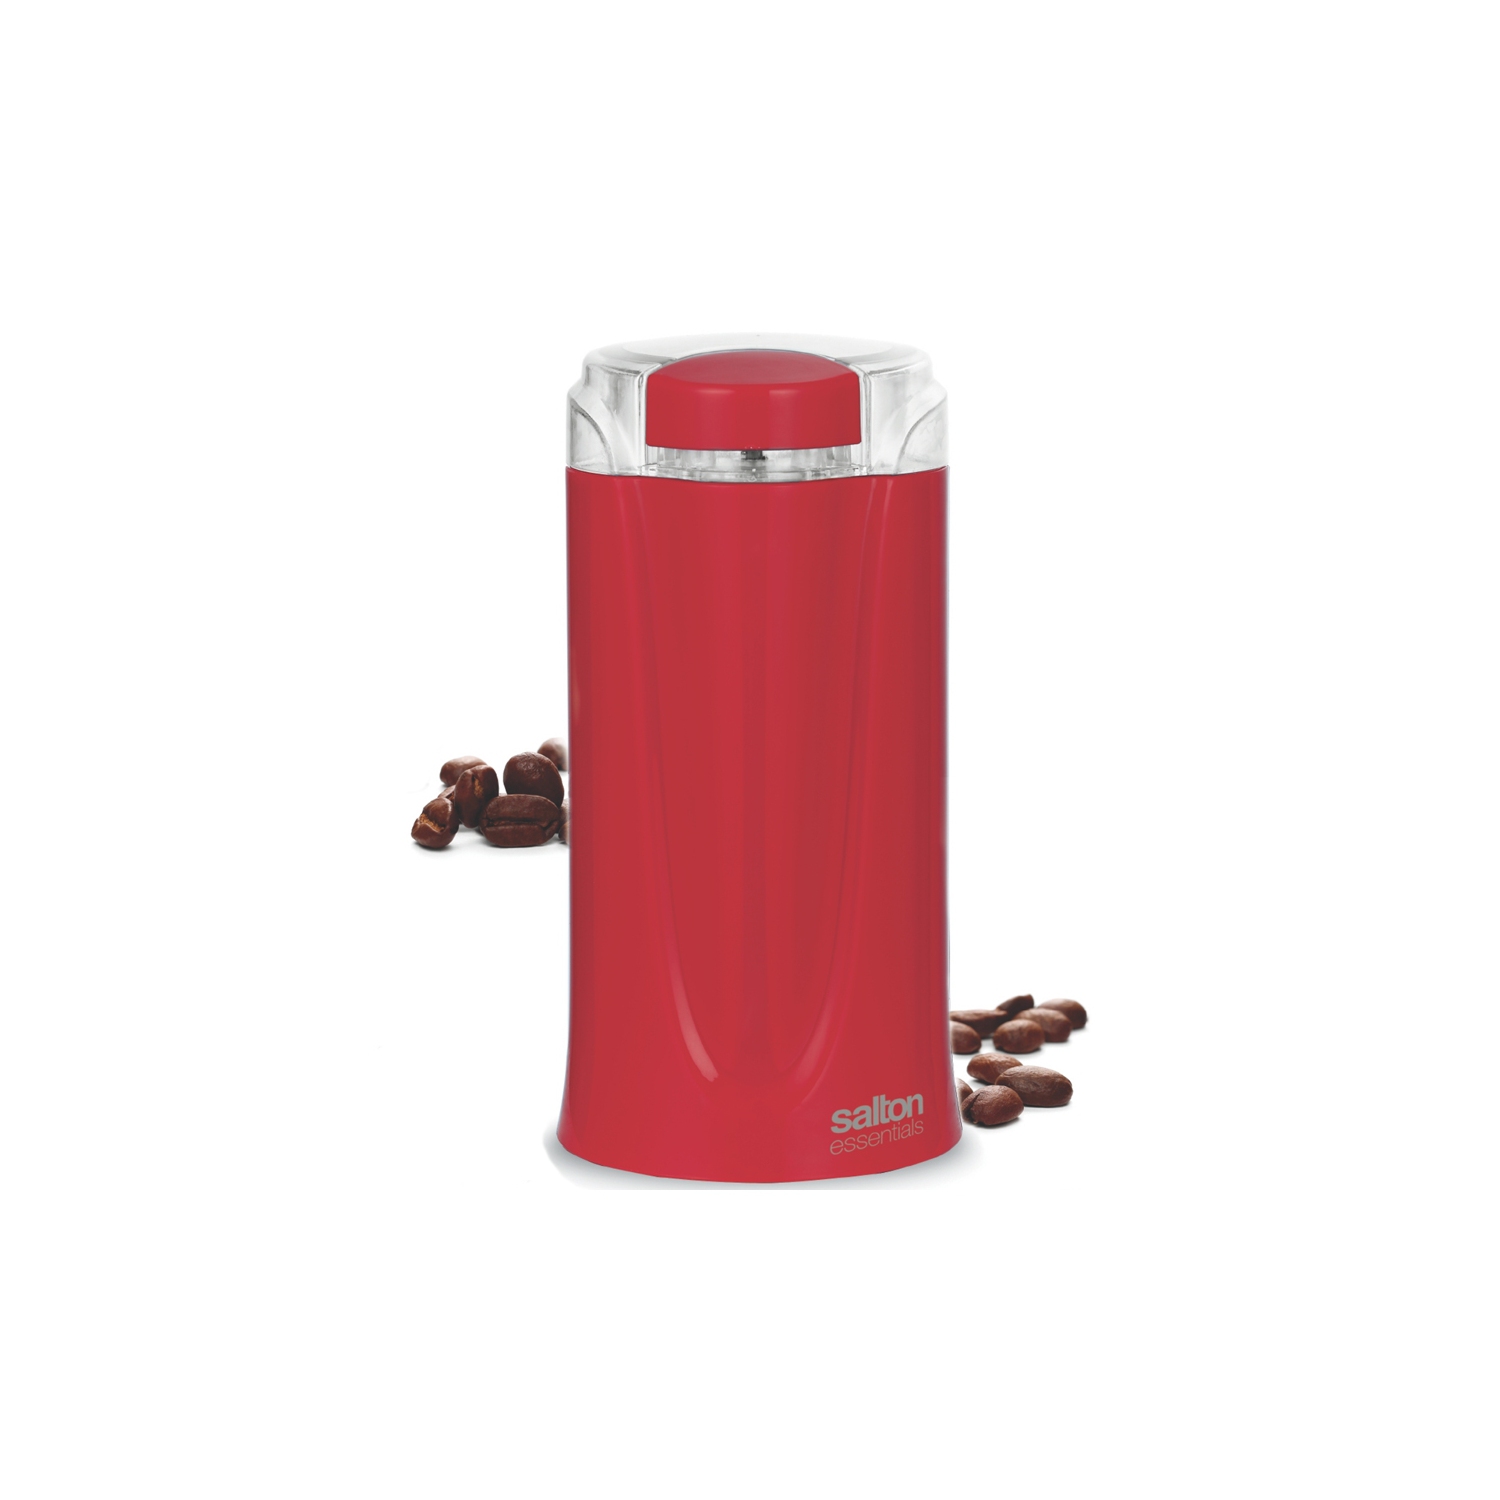 Salton Essentials Coffee and Spice Grinder Red